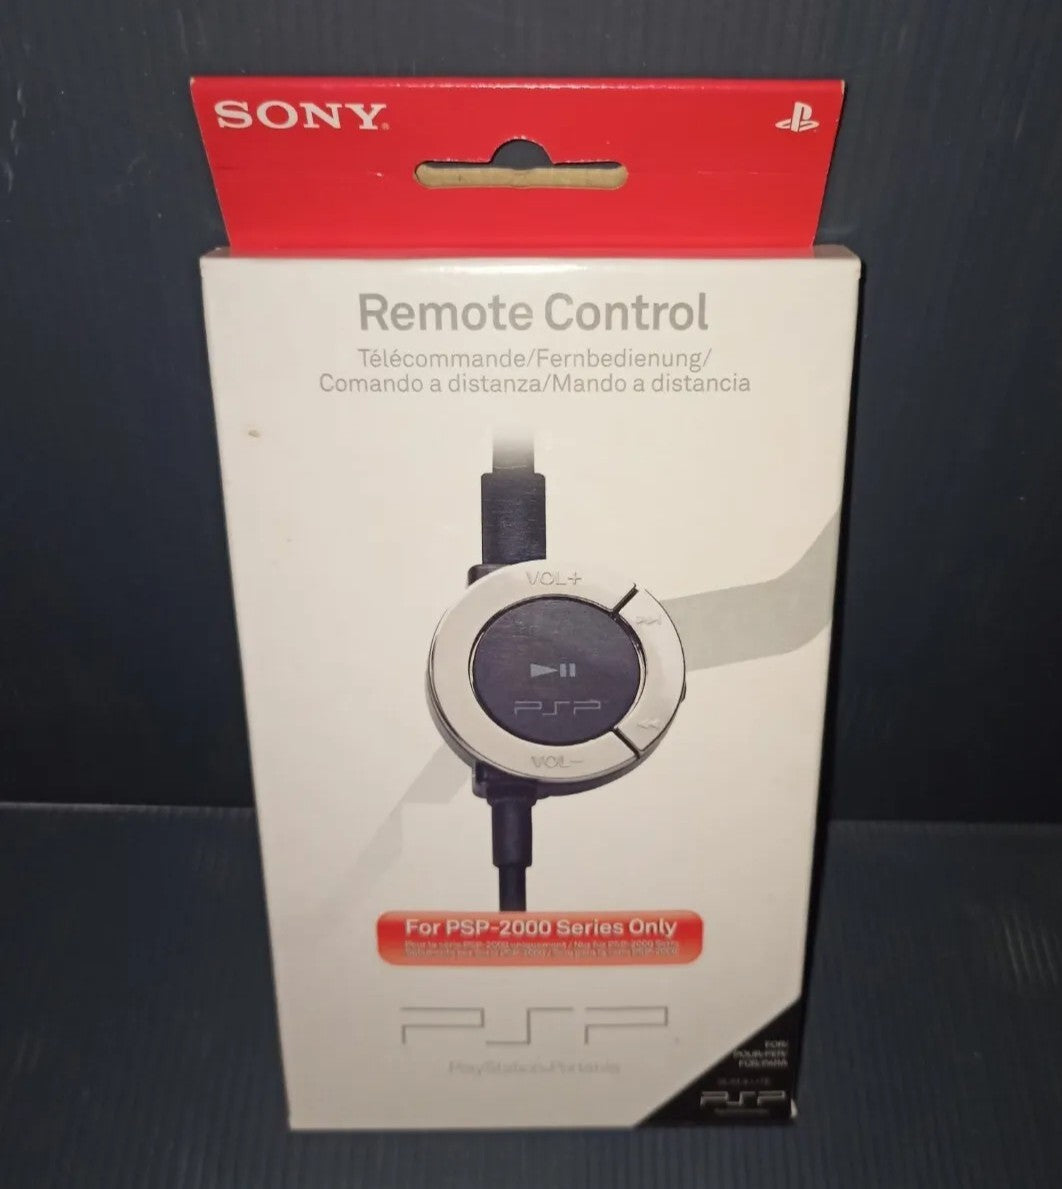 Remote Control Sony PSP remote control